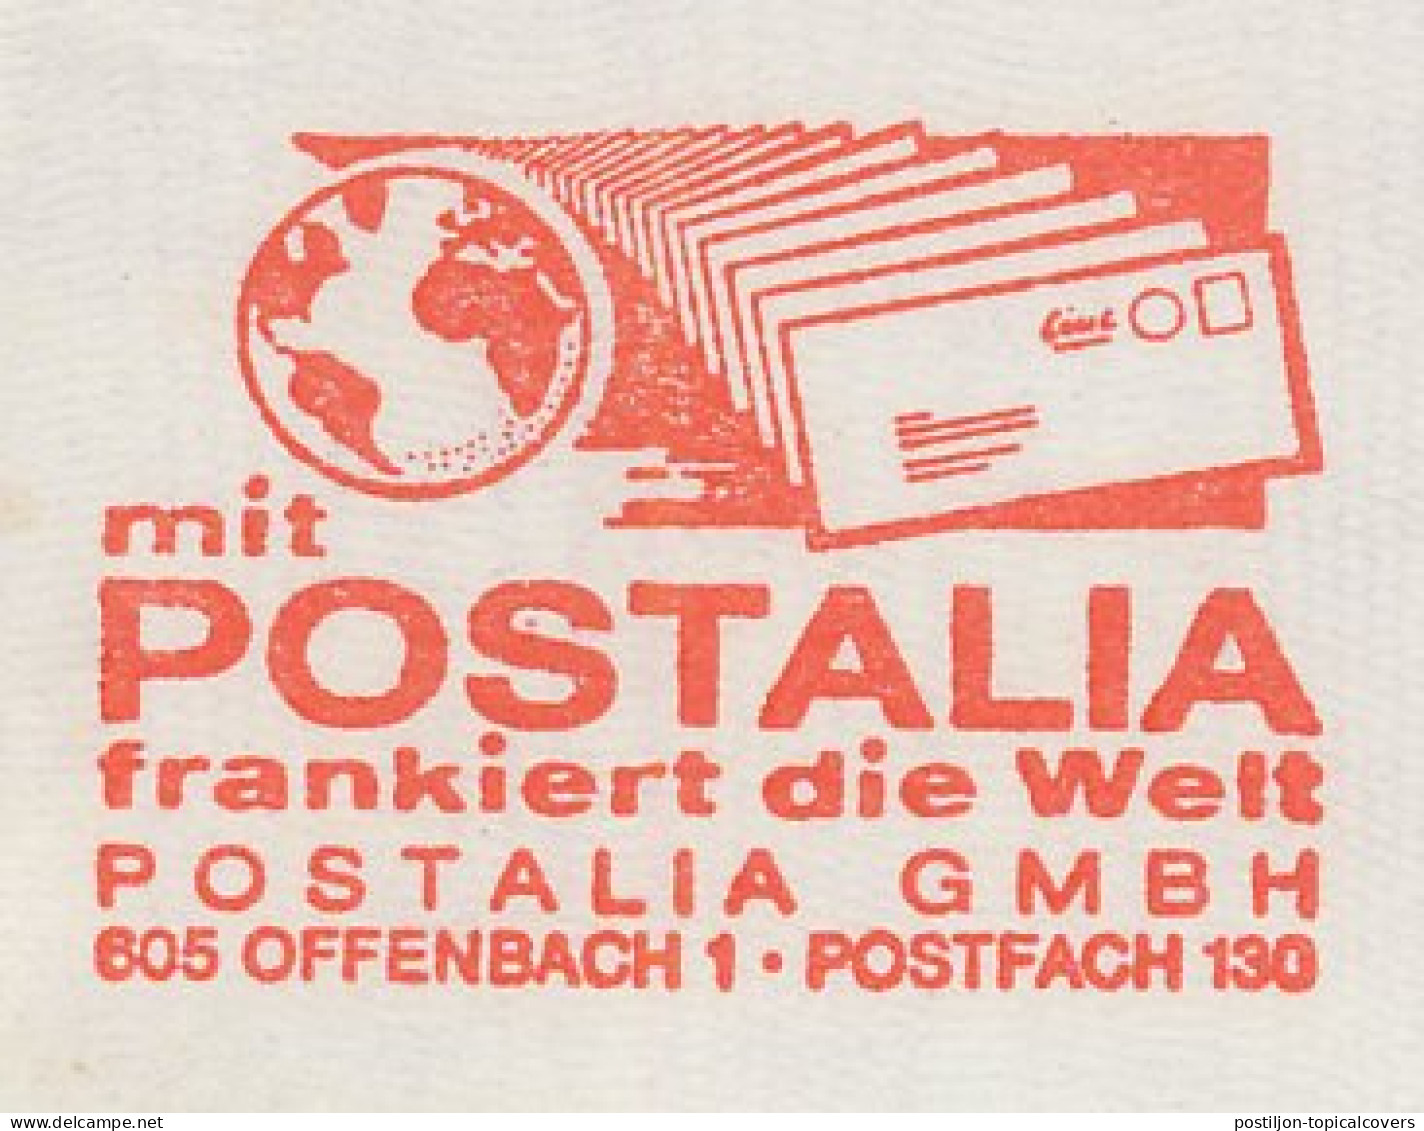 Meter Cut Germany 1975 Postalia  - Viñetas De Franqueo [ATM]